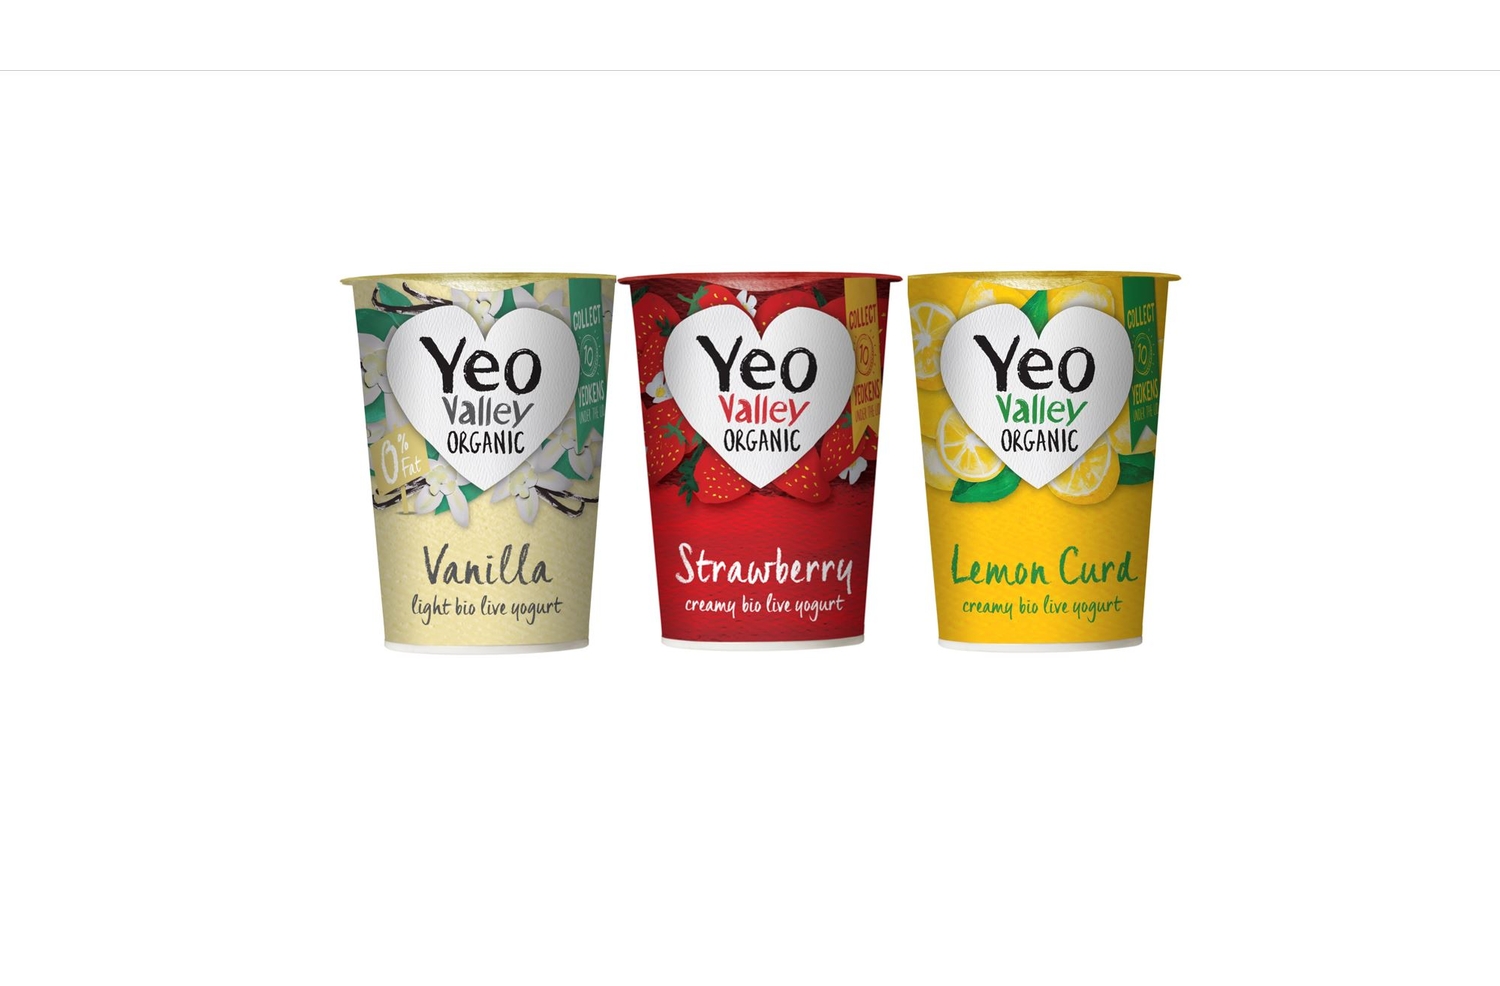 Pack shots of Yeo Valley Organic Flavoured Yogurts